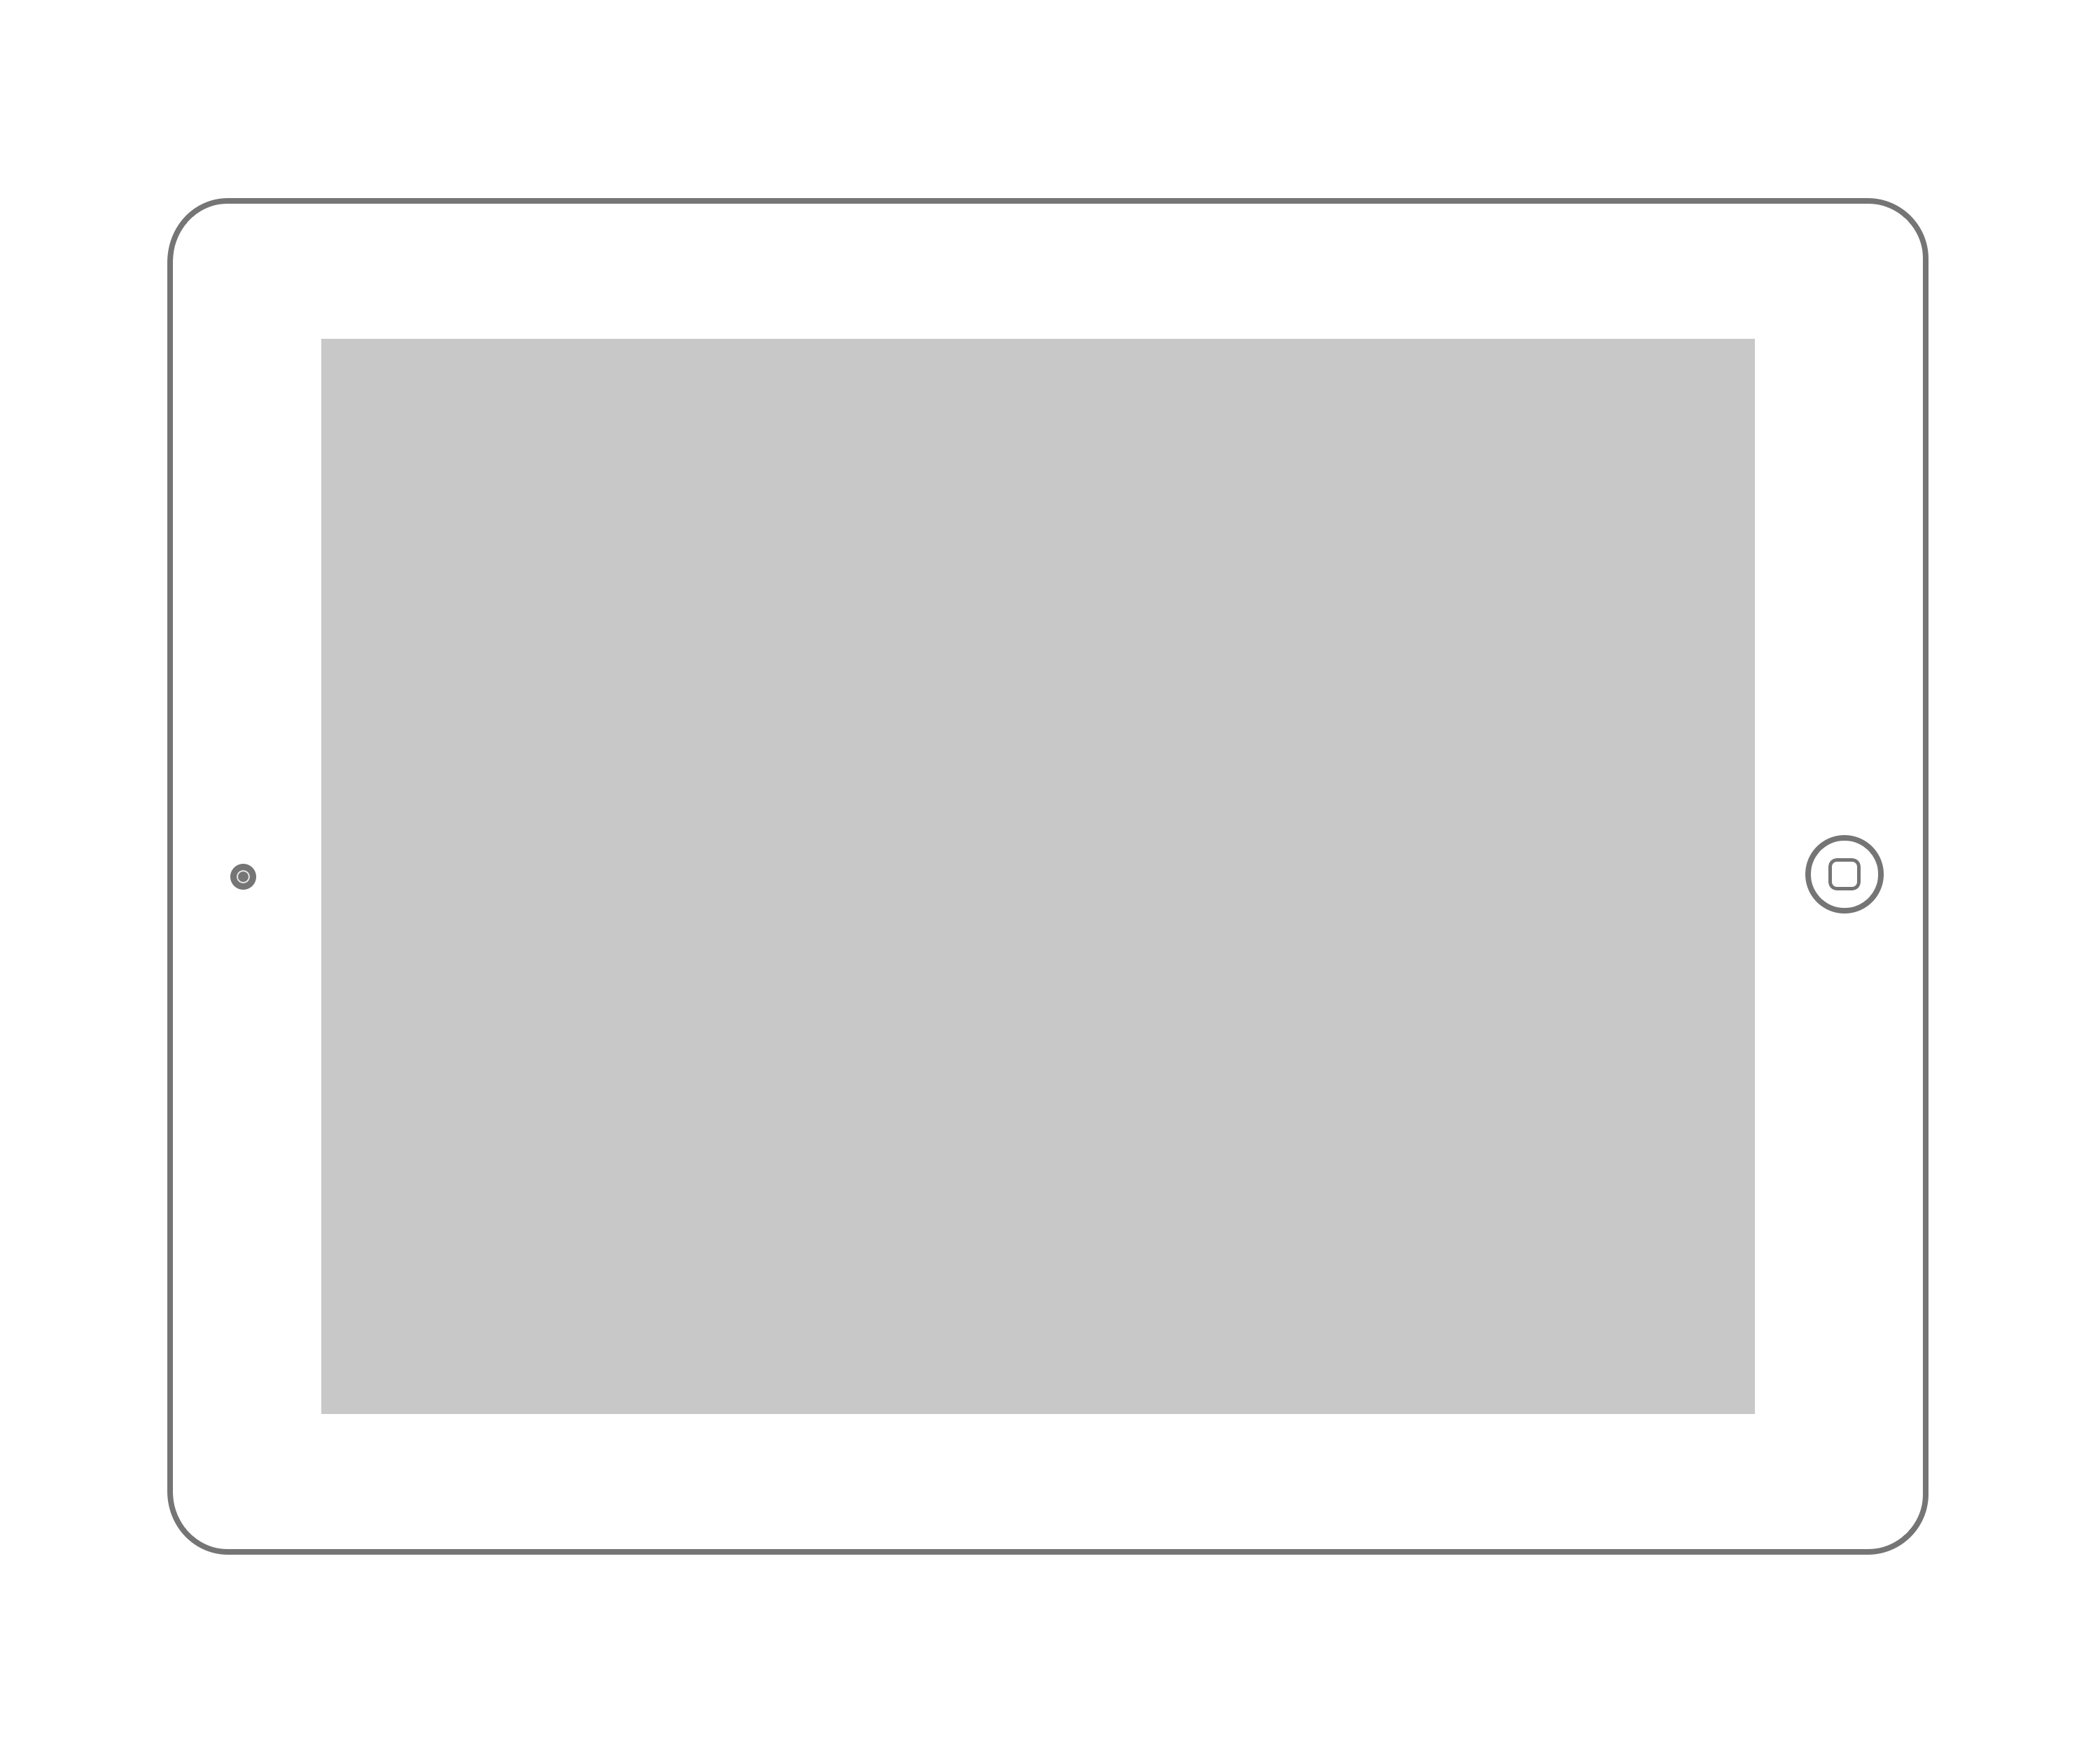 Horizontal iPad Mini